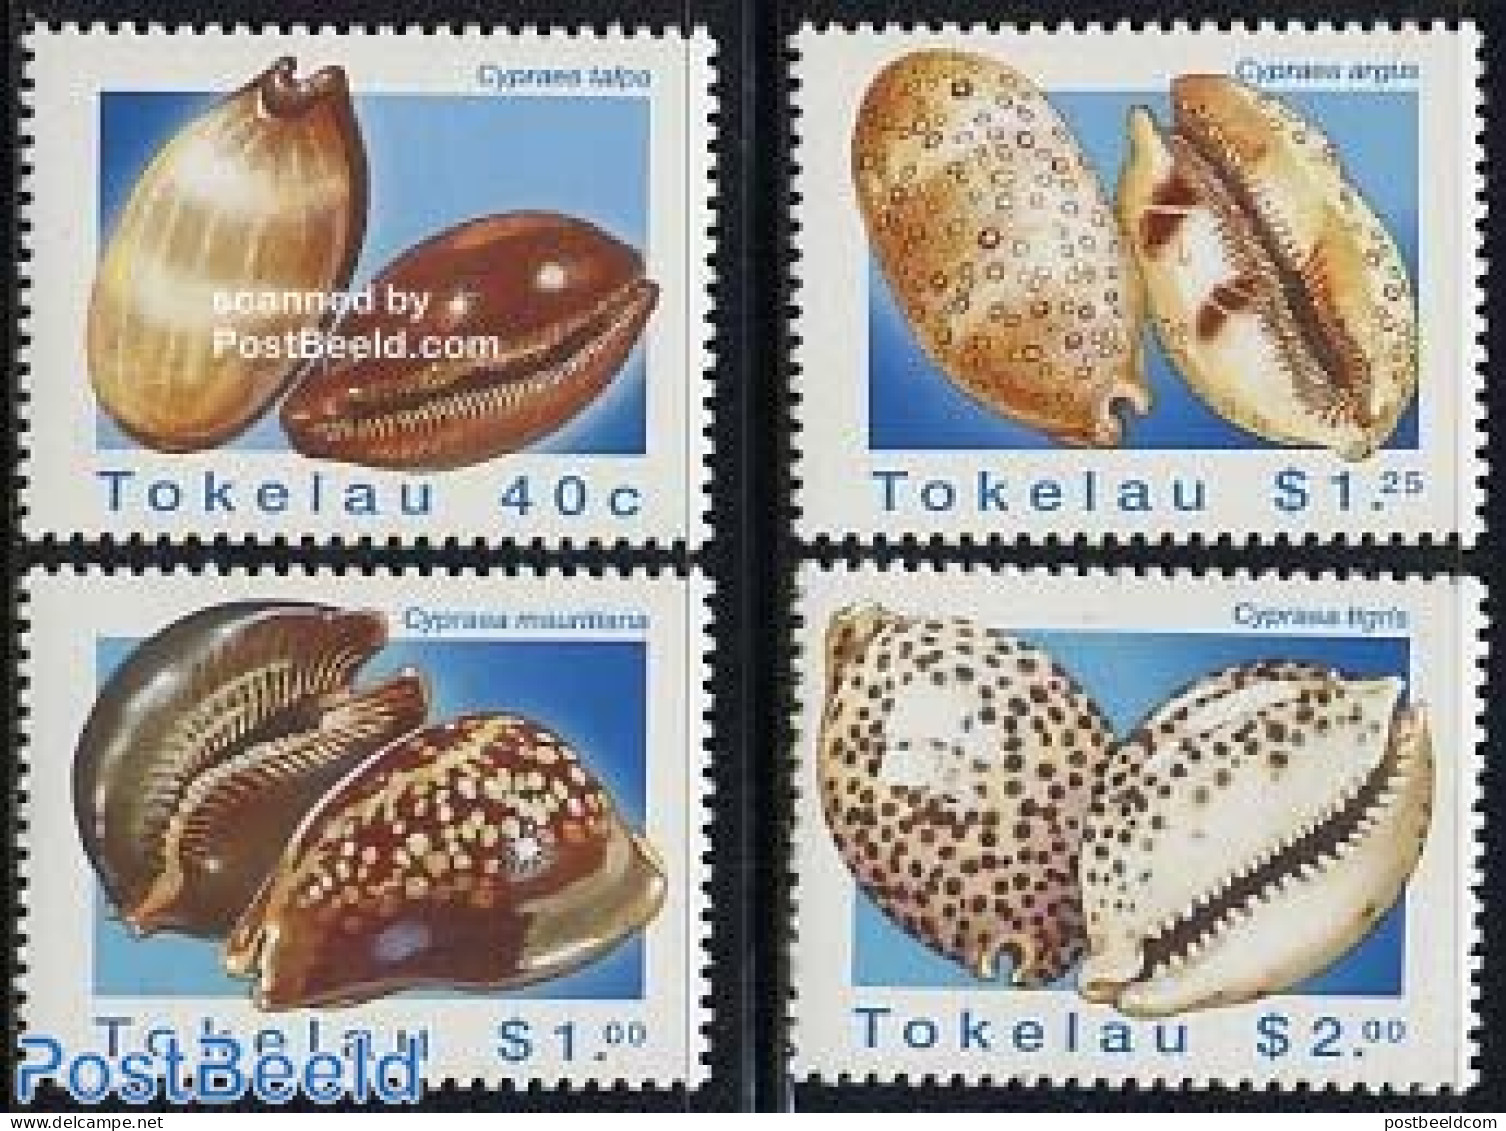 Tokelau Islands 1996 Shells 4v, Mint NH, Nature - Shells & Crustaceans - Marine Life